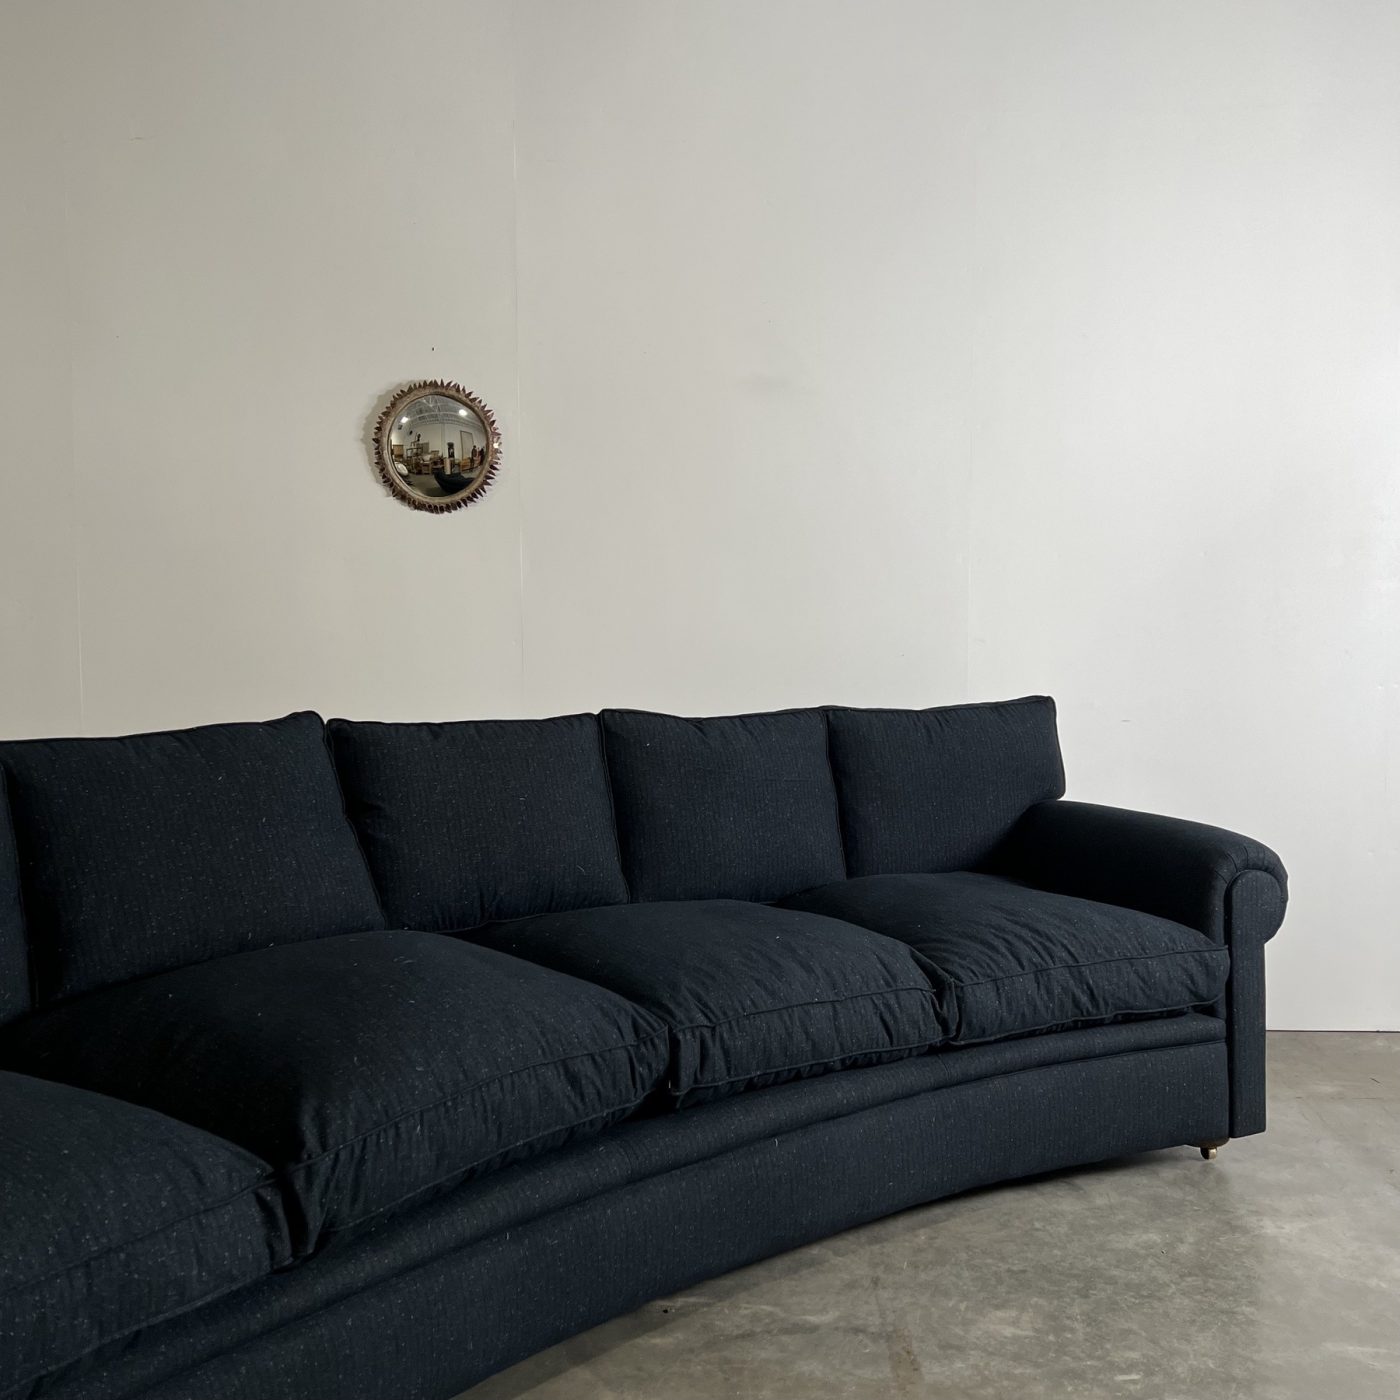 objet-vagabond-huge-sofa0008